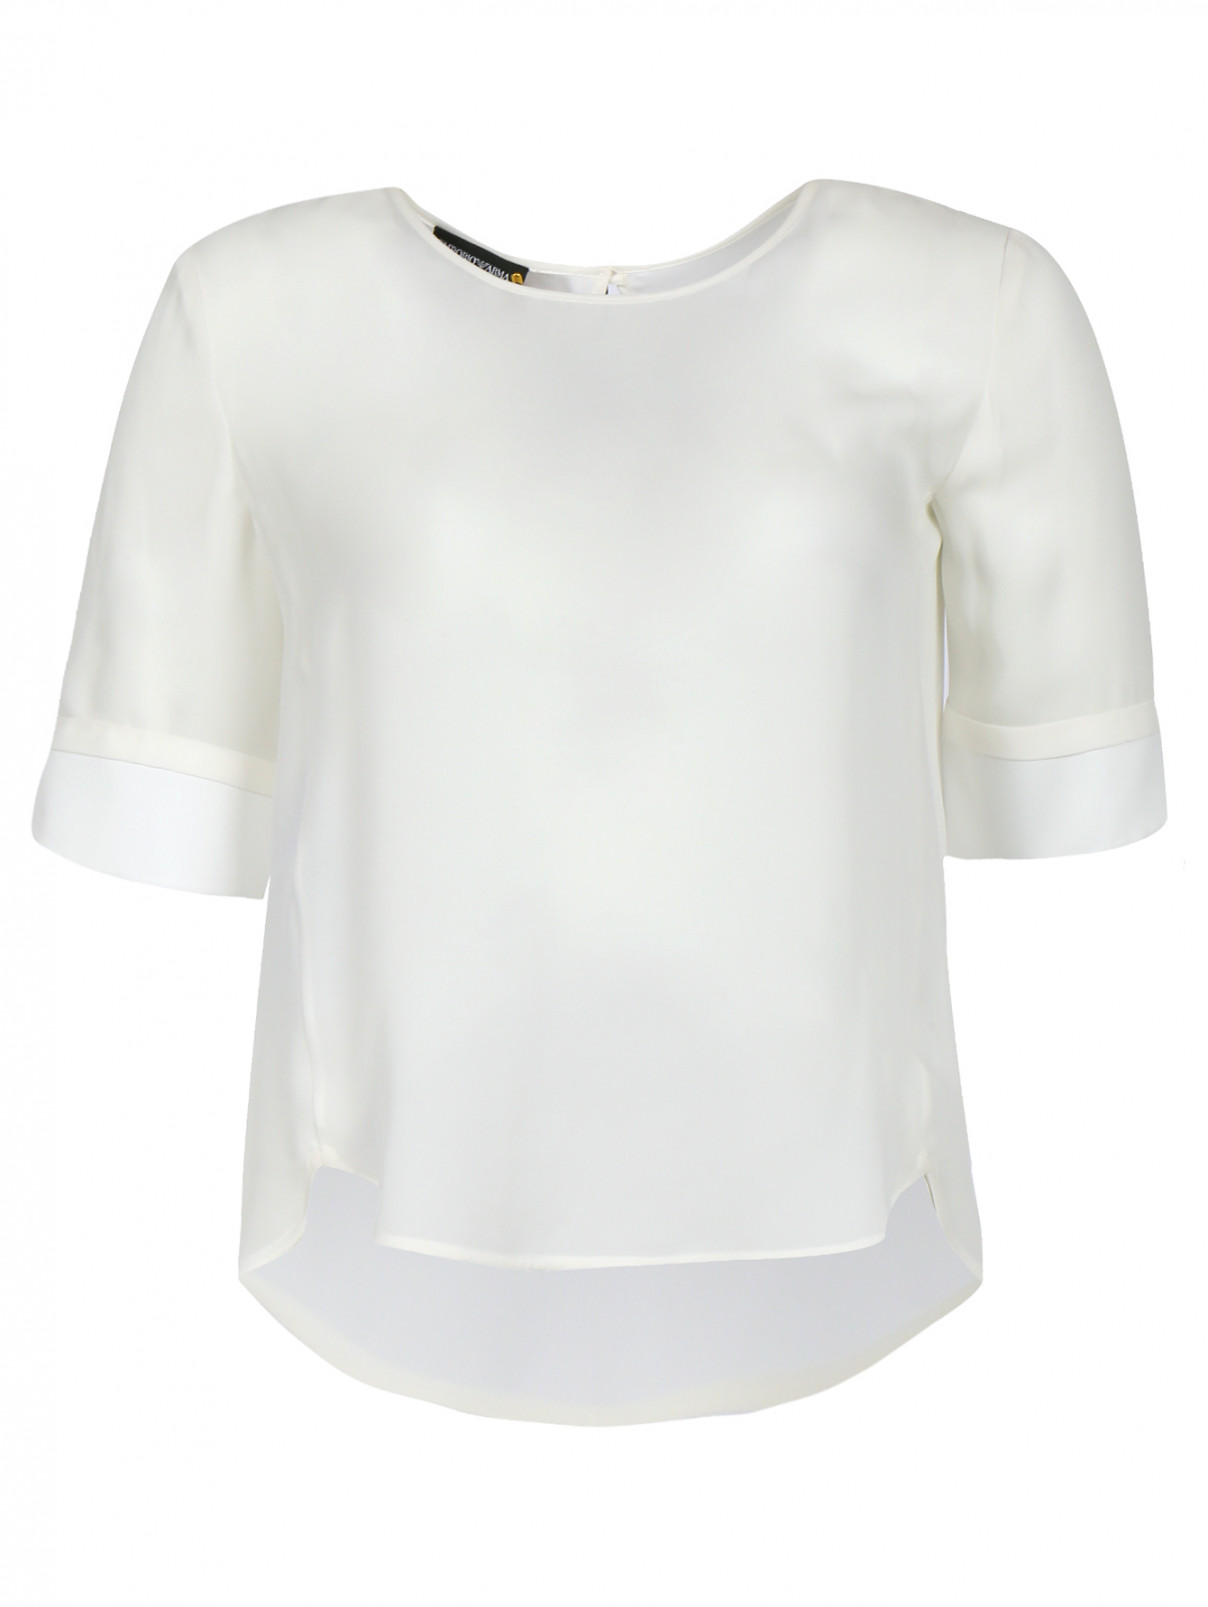 Блуза из шелка с коротким рукавом Emporio Armani  –  Общий вид  – Цвет:  Бежевый